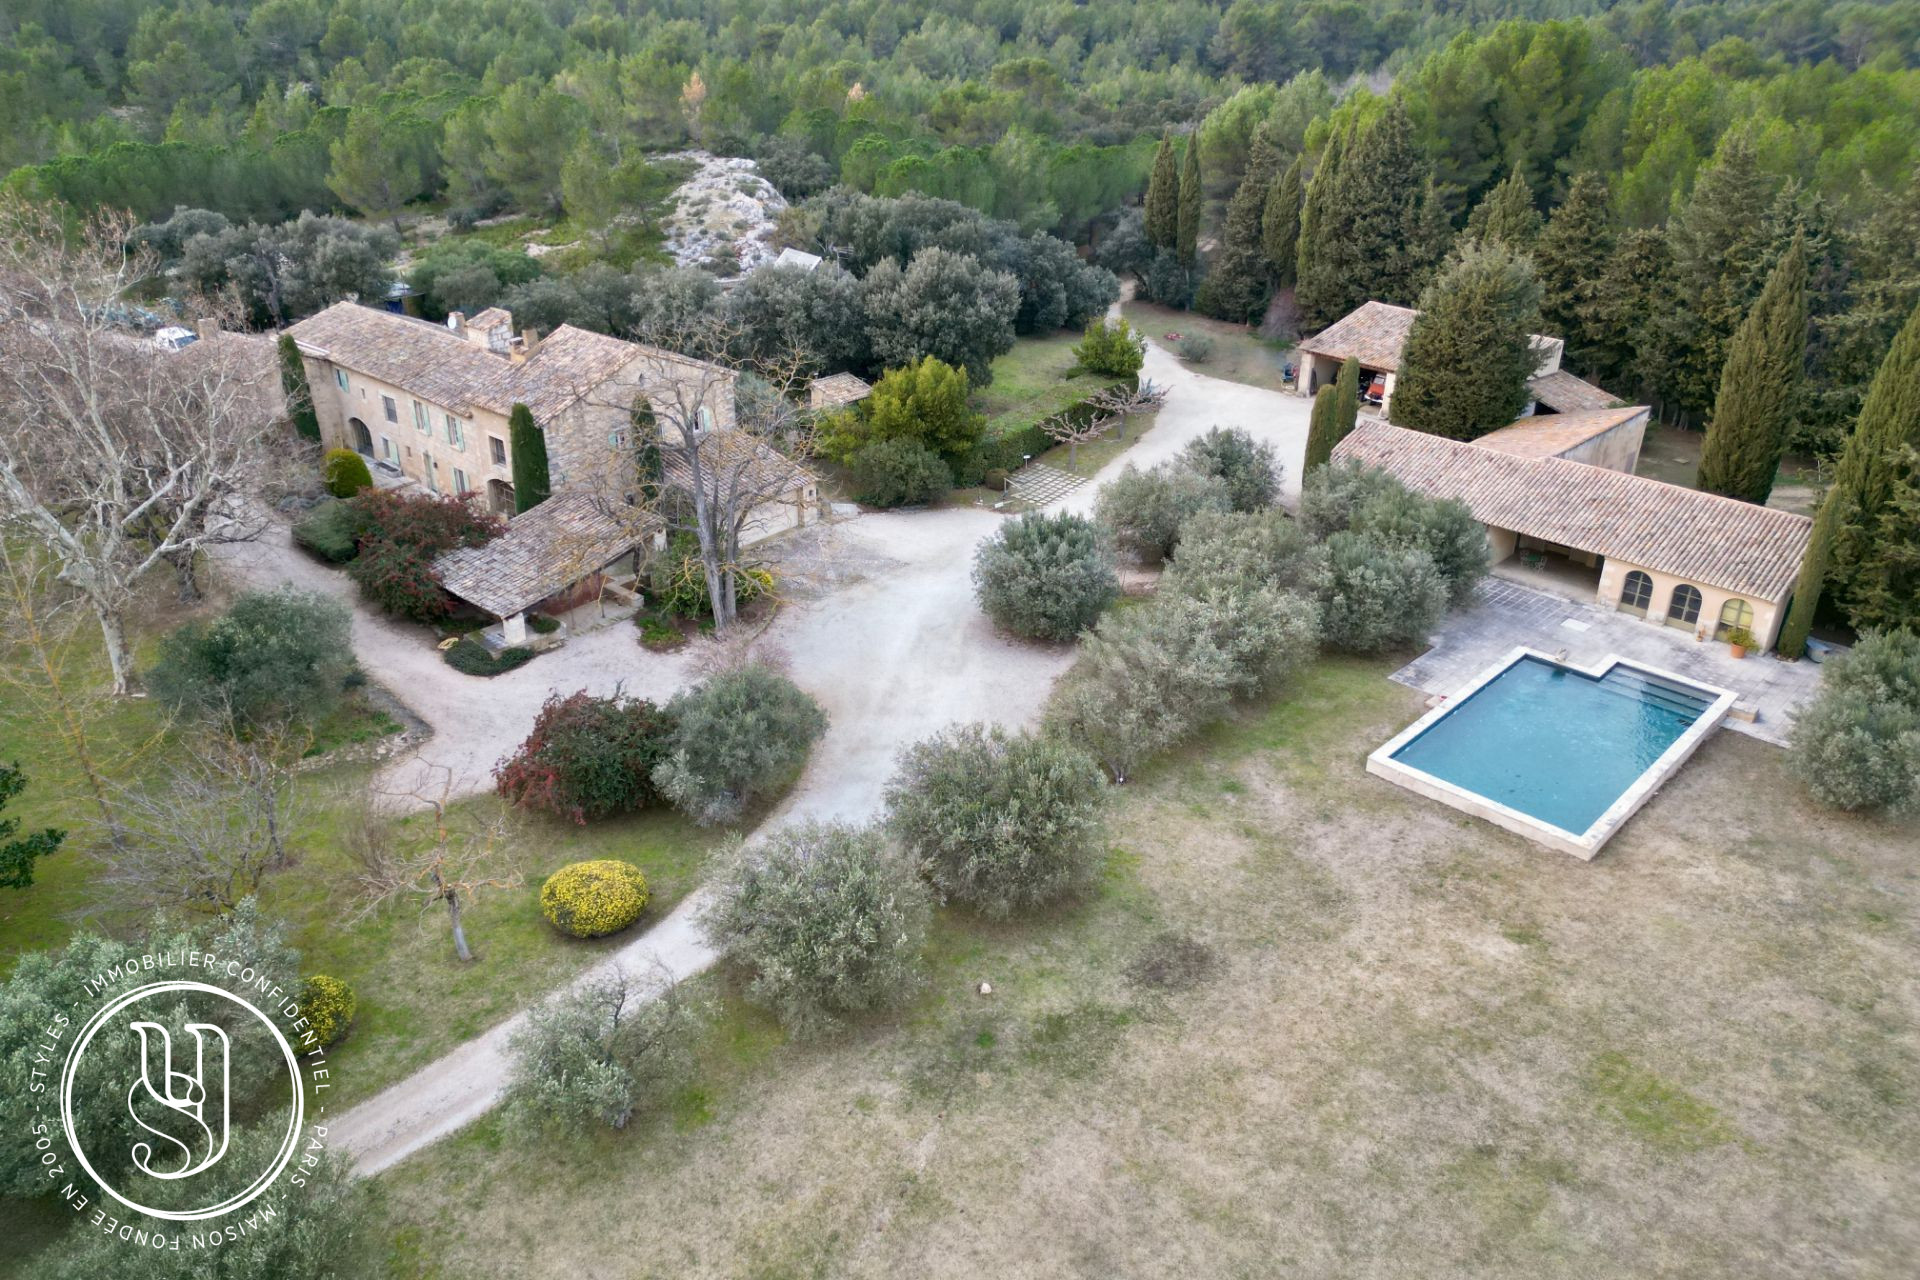 Saint-Rémy-de-Provence - in the countryside - Fabulous 28ha estate - image 10